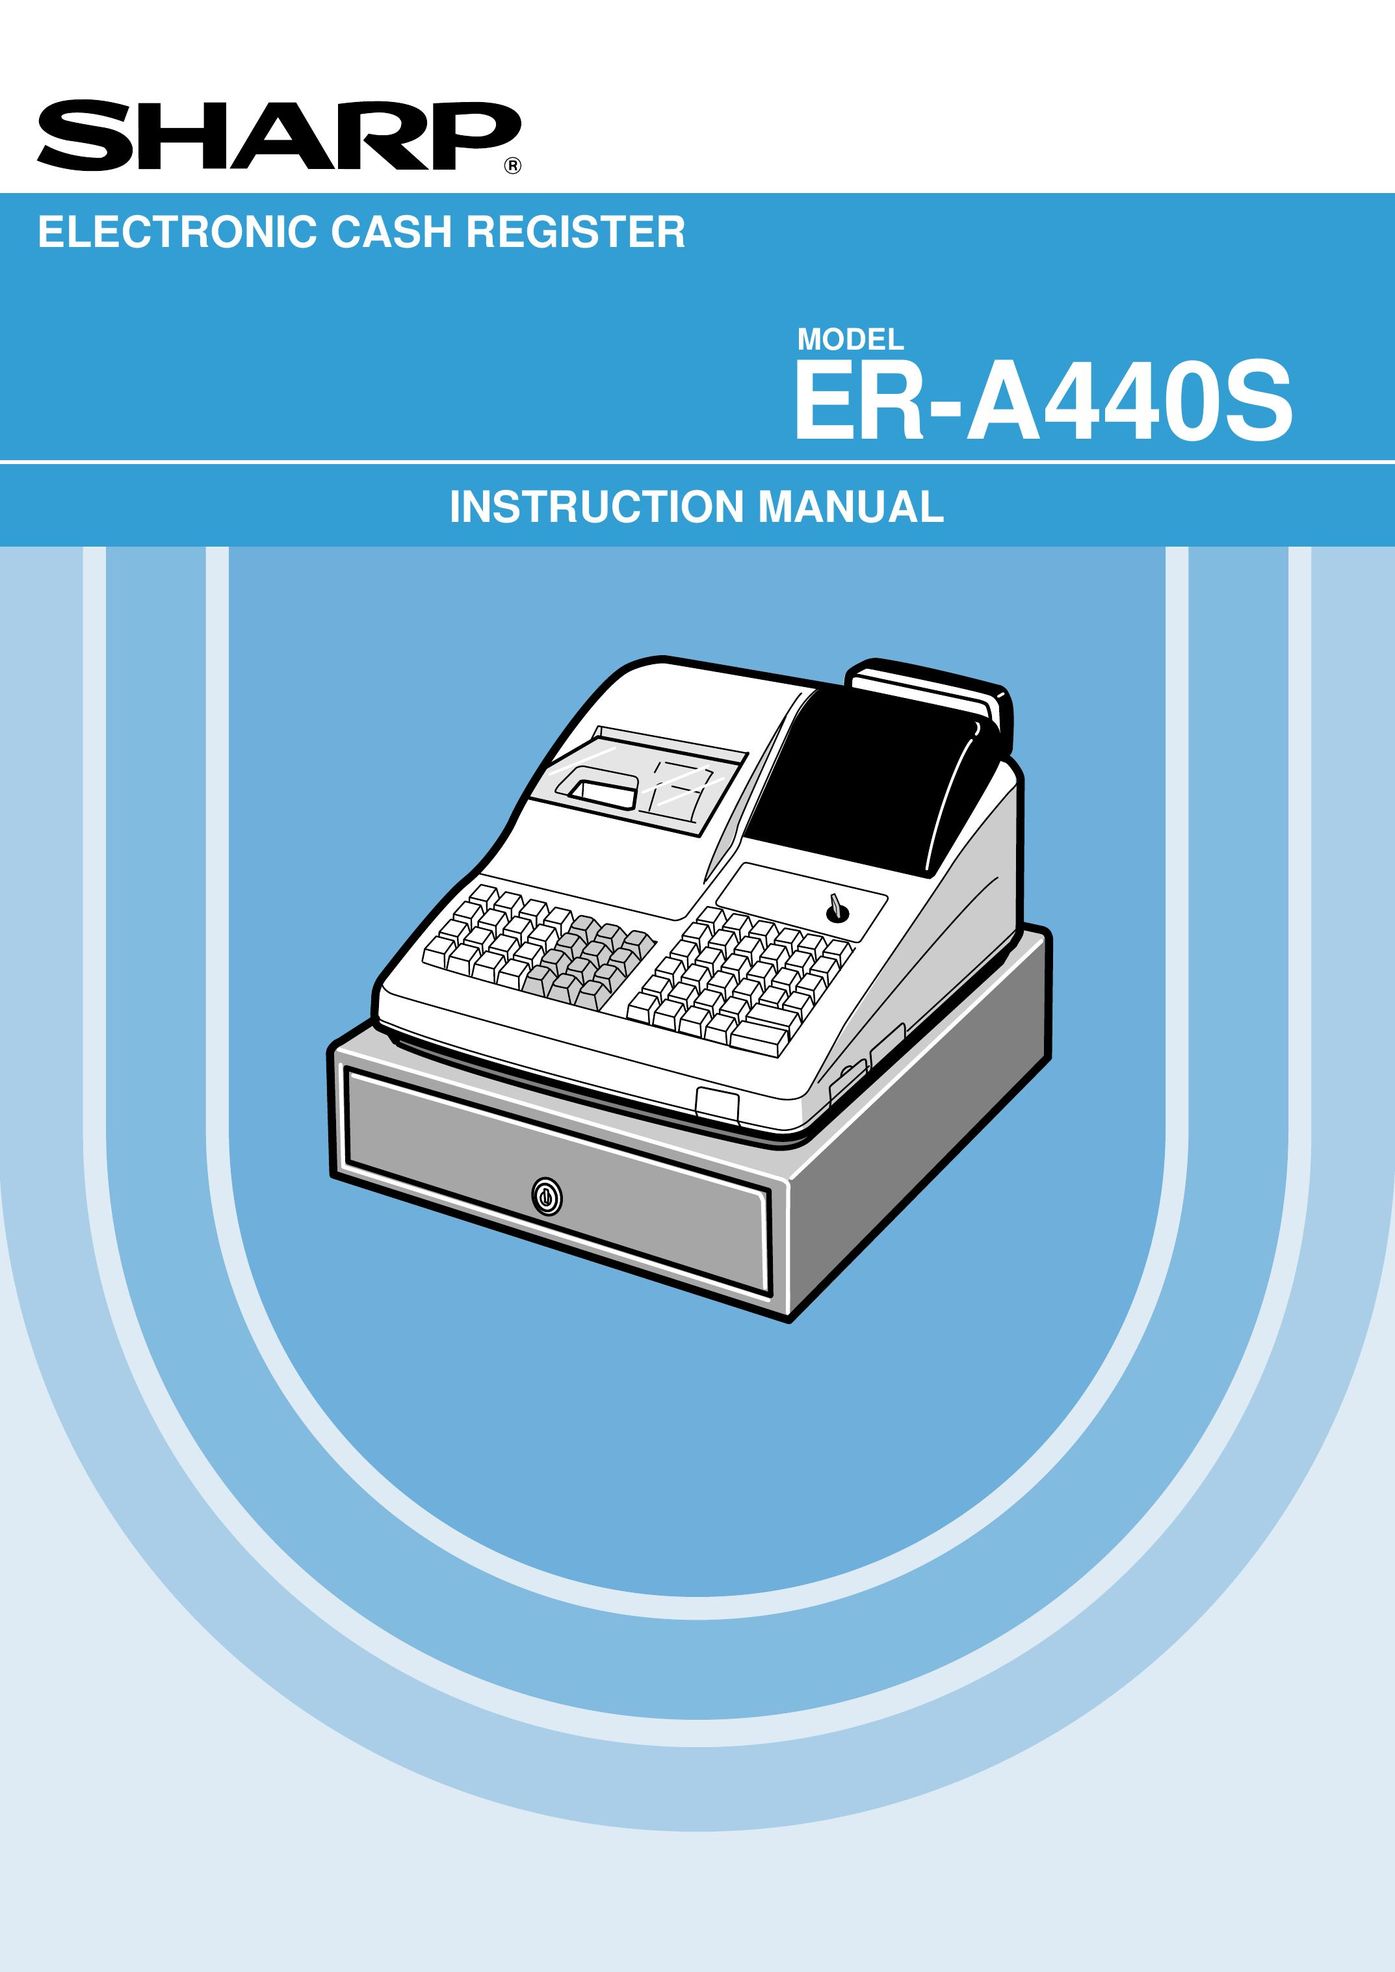 Sharp ER-A440S Cash Register User Manual